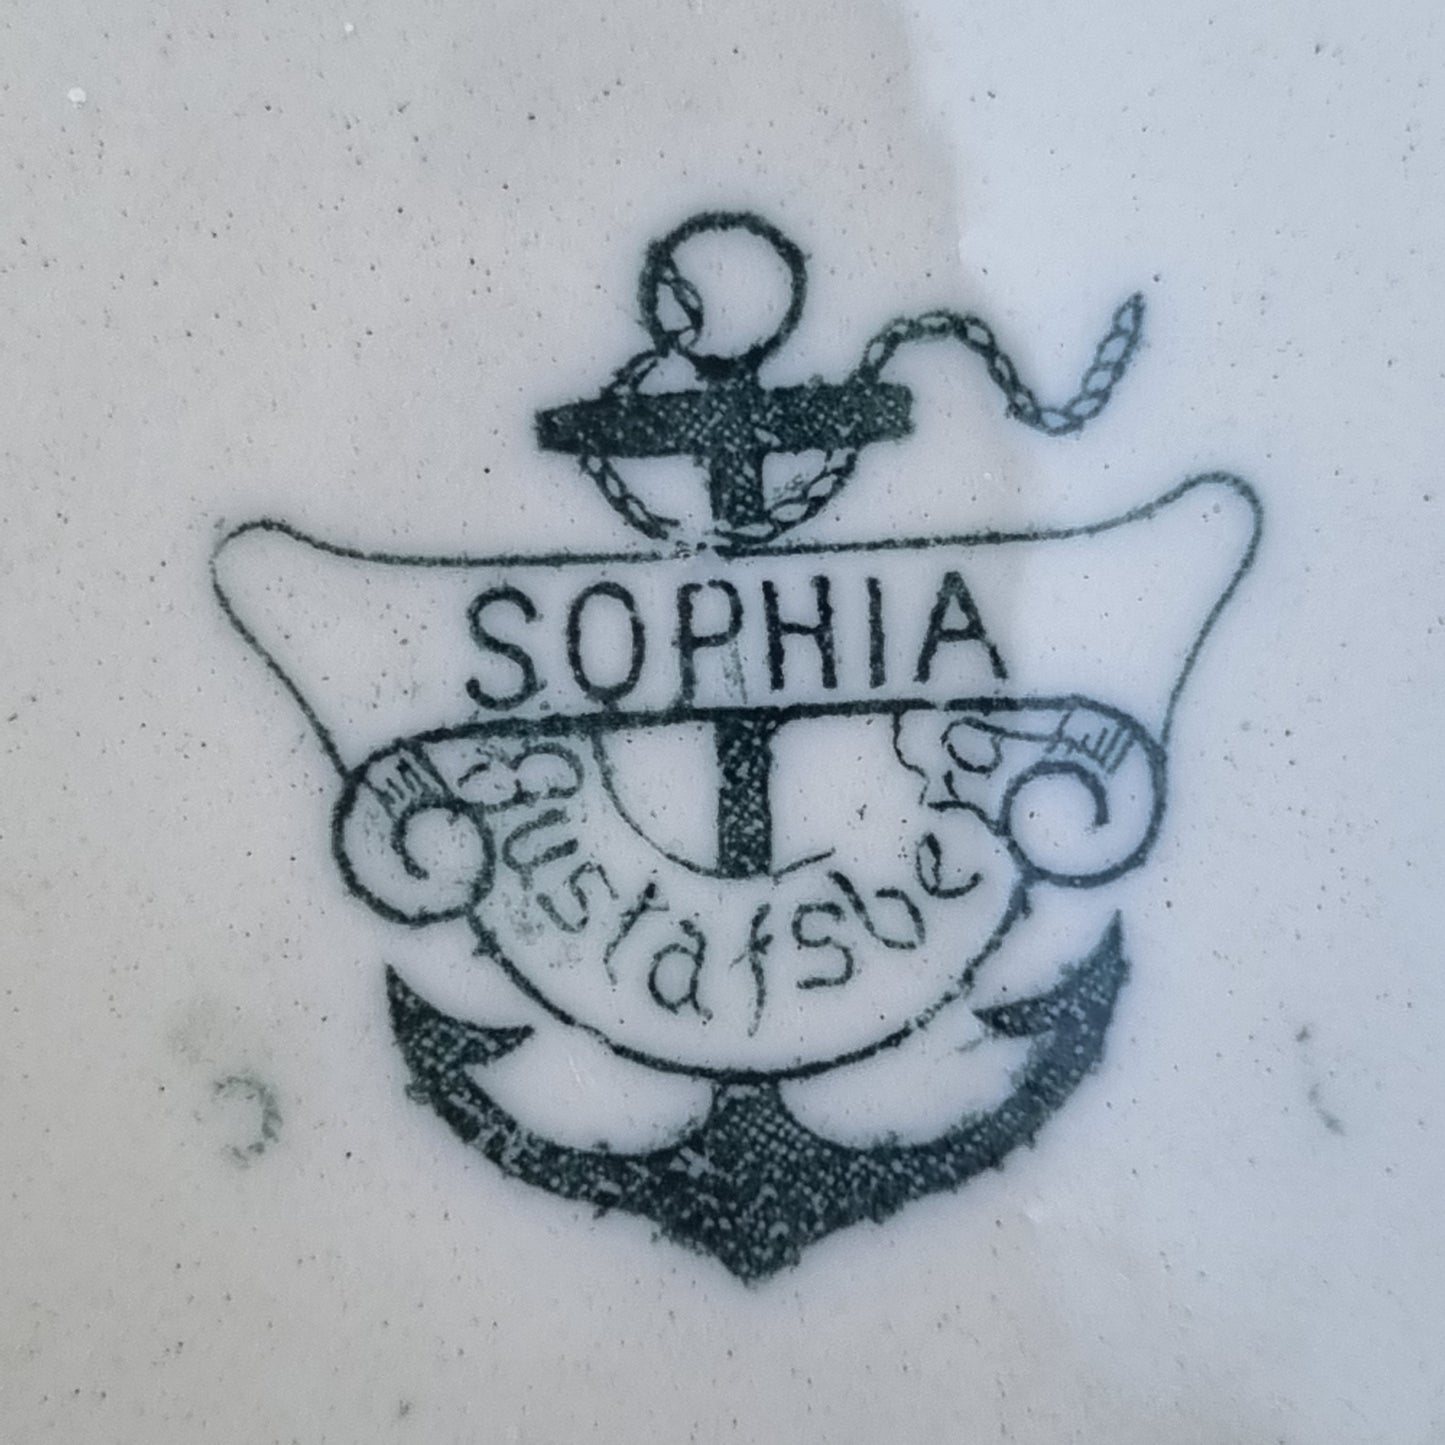 12 platos de postre Gustavsberg "Sophia"